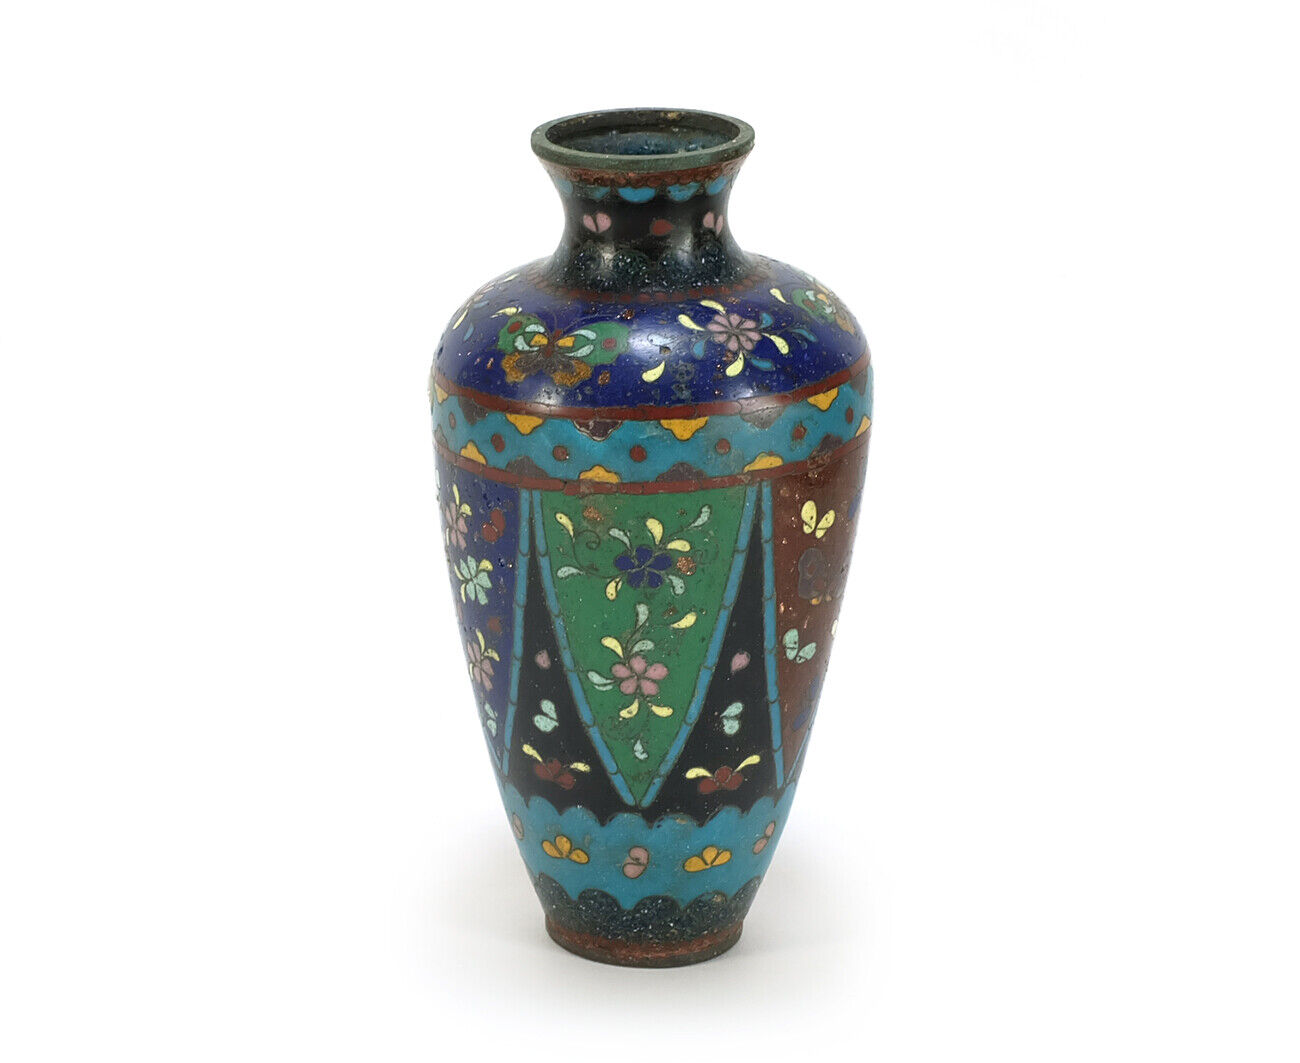 Meiji Period Antique Japanese Cloisonne Vase #1 • 6" Tall Butterflies & Flowers